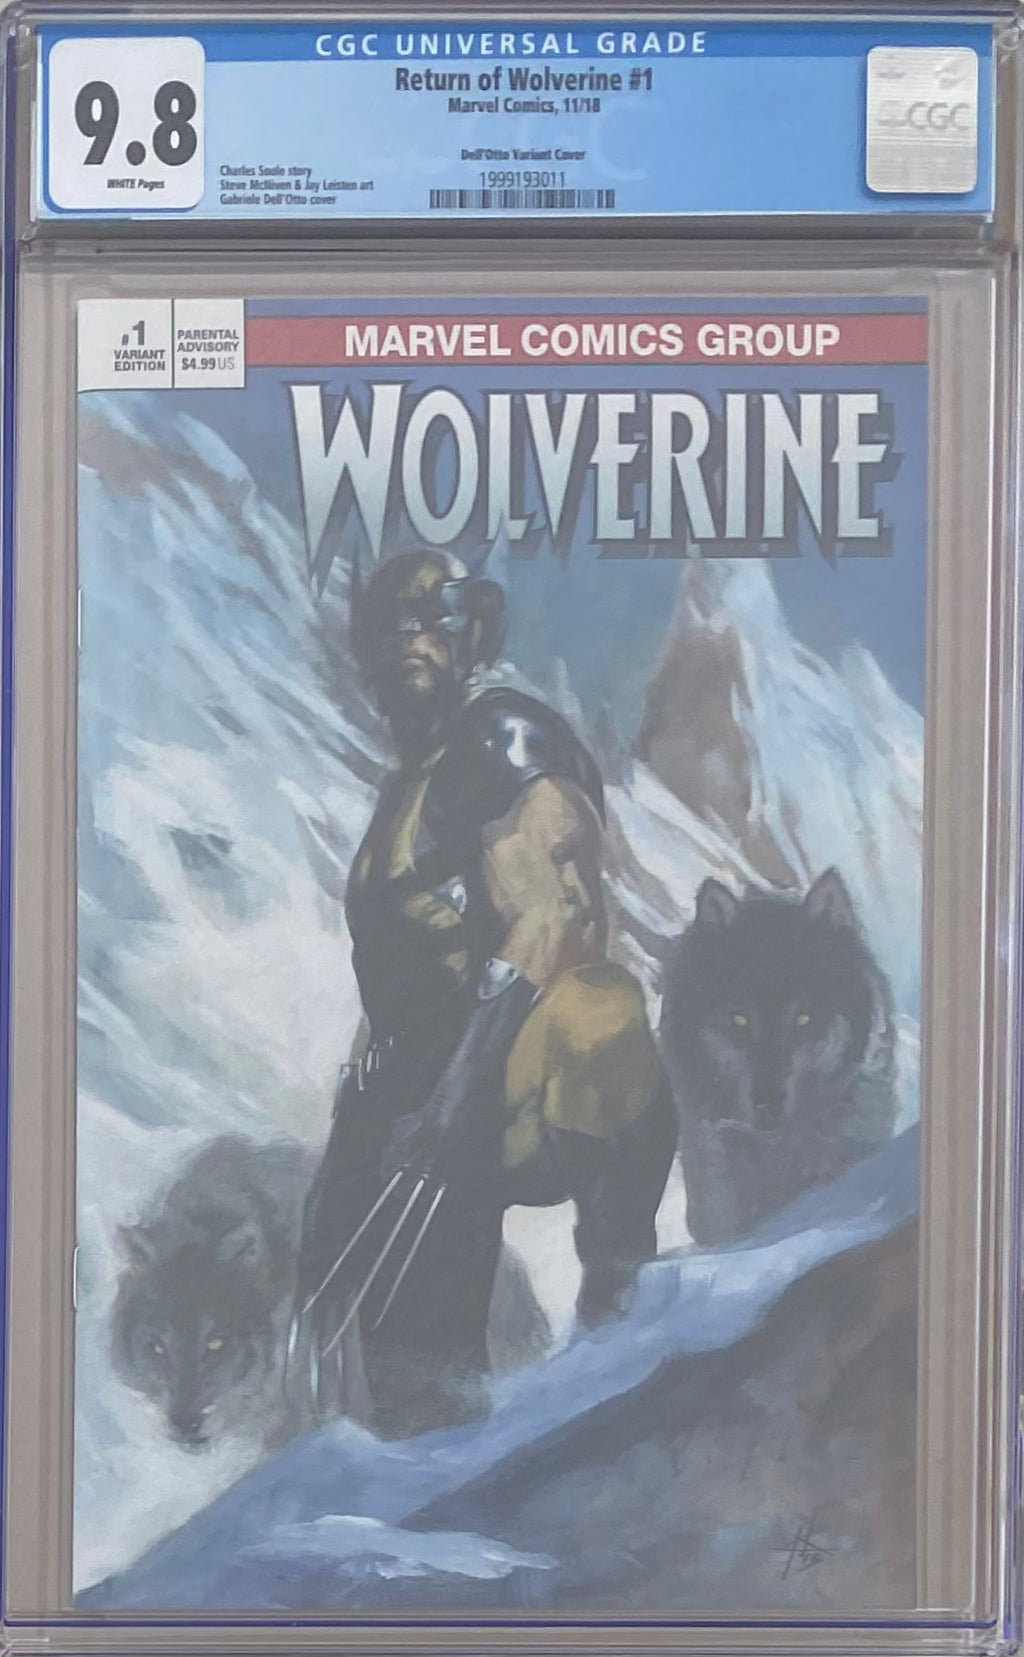 Return of Wolverine #1 Dell'Otto Variant CGC 9.8